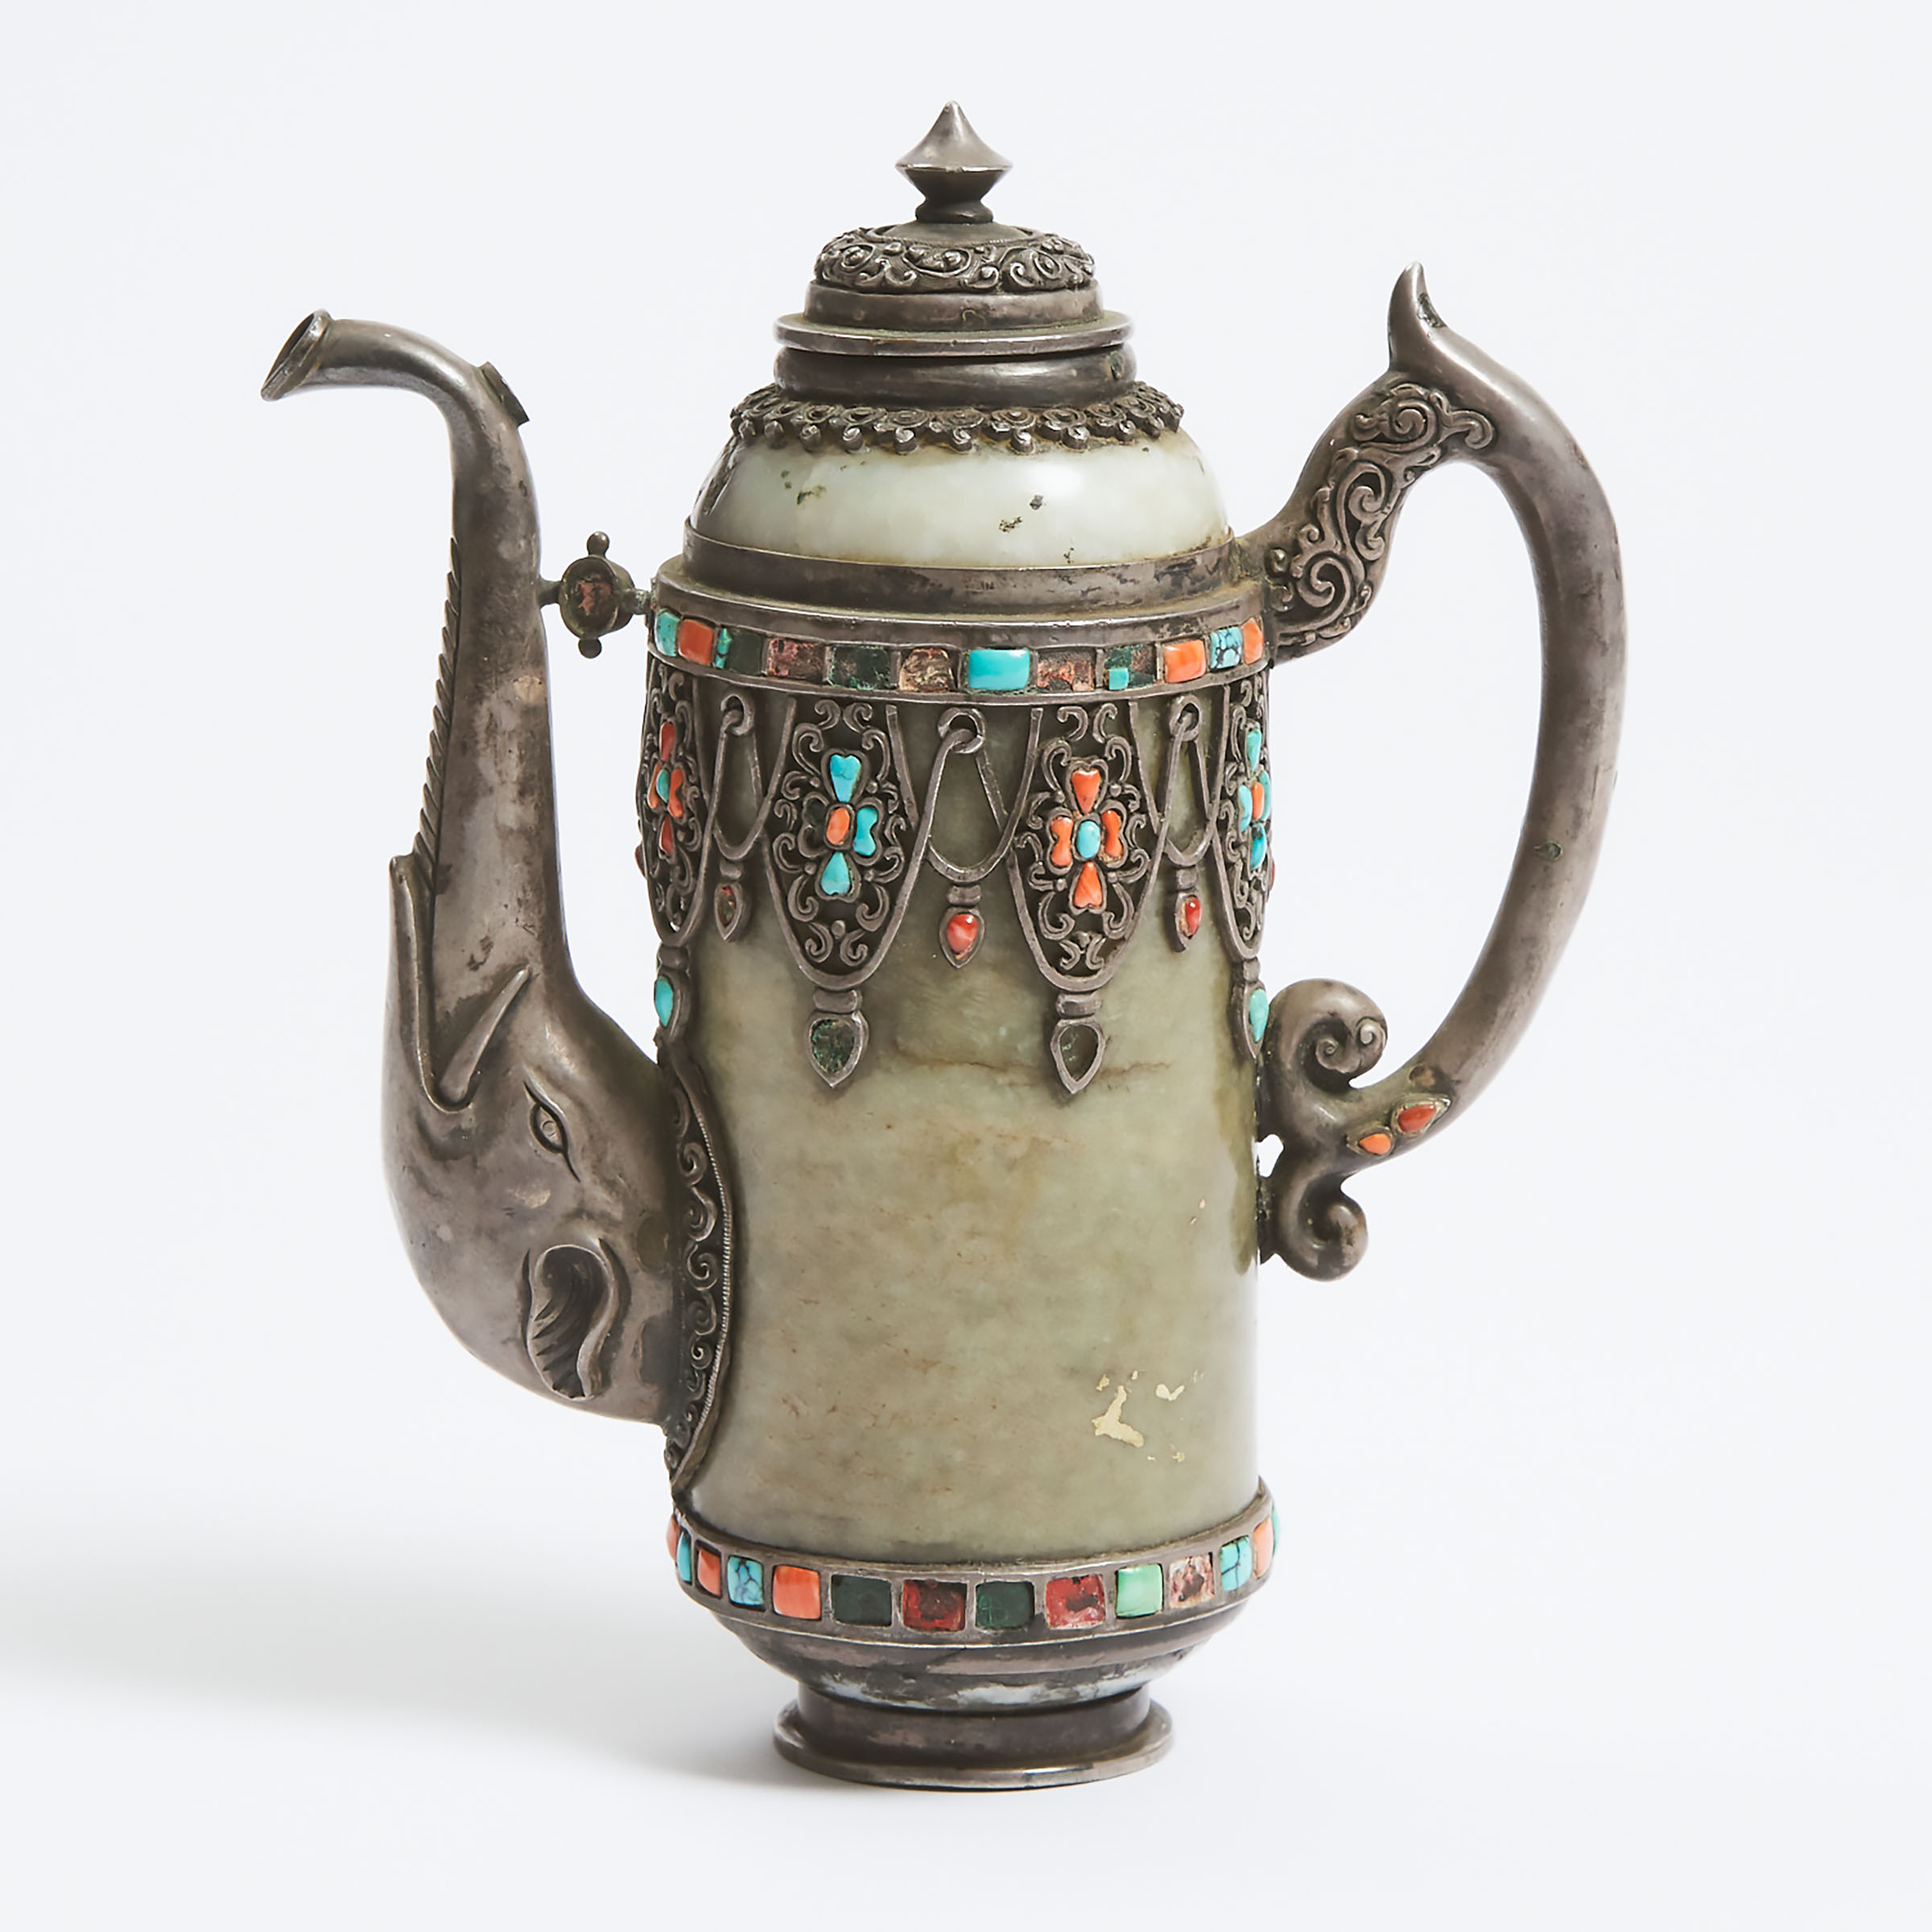 A Mottled Celadon Jade Silver-Mounted Teapot, Tibet/Mongolia, 19th Century or Earlier